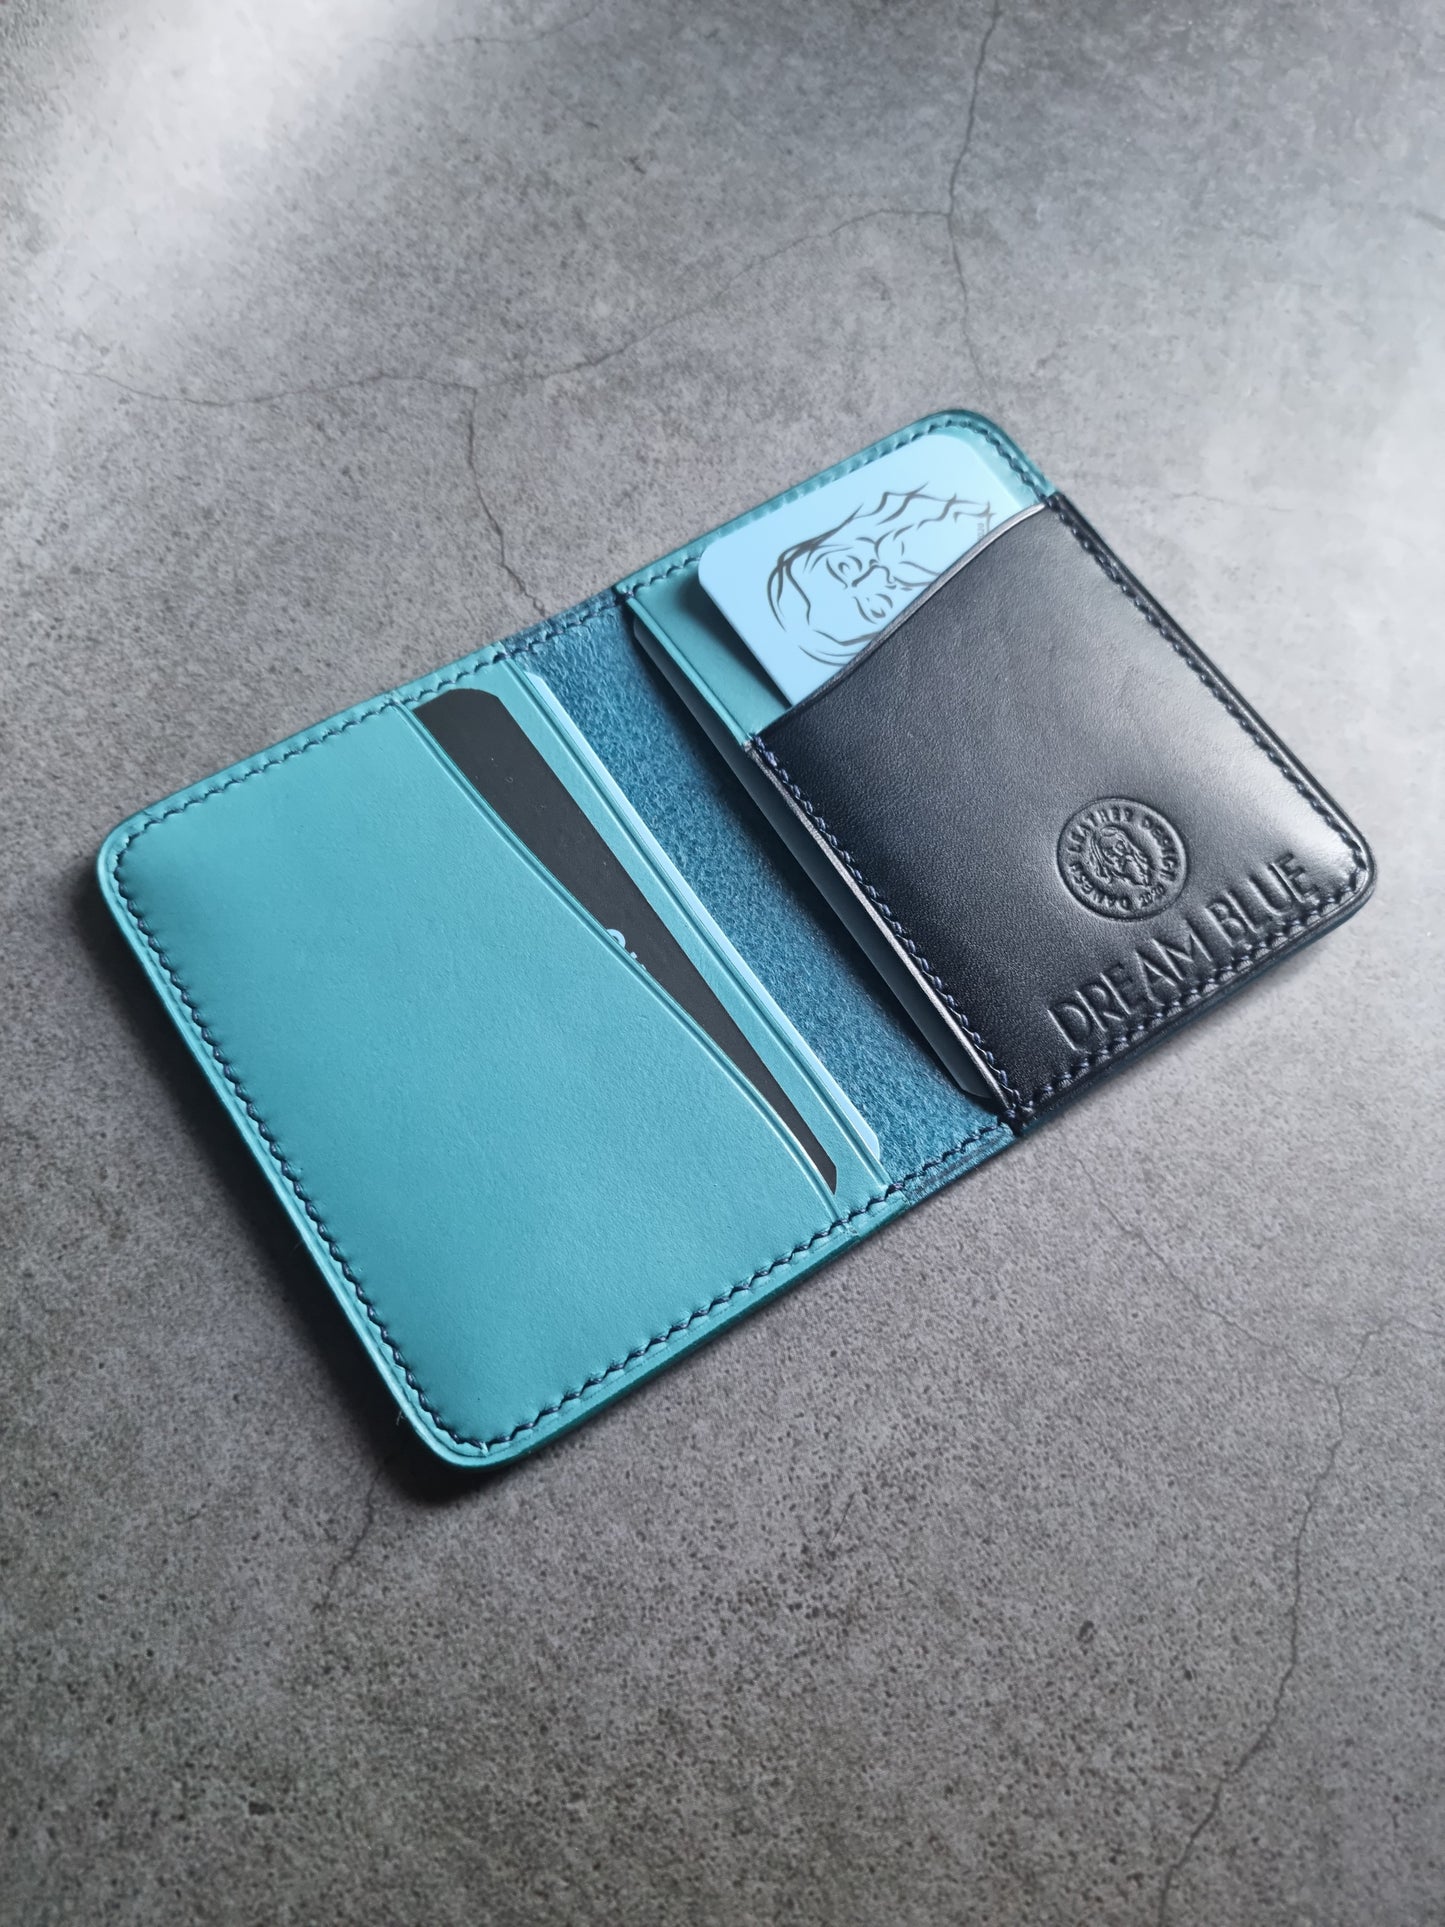 Denis the menace - Mini wallet - Leather Template | DIY | Pdf